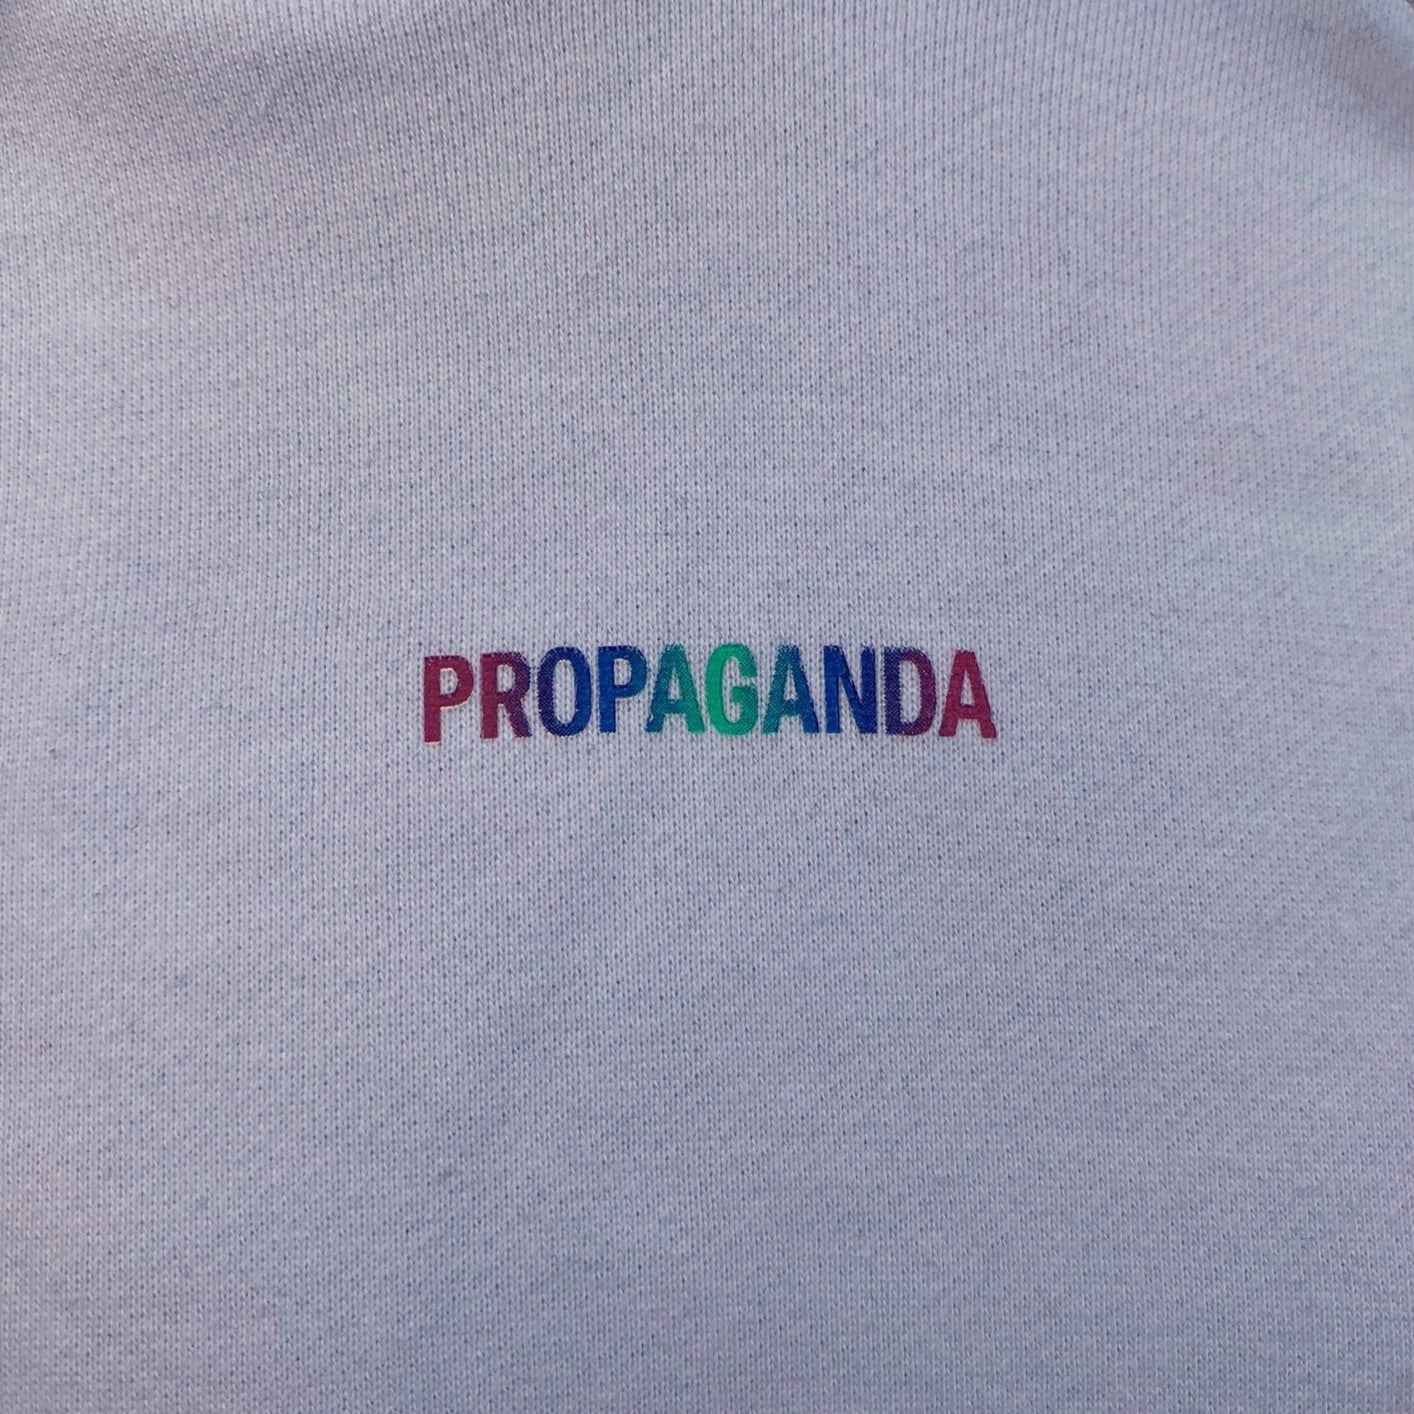 Propaganda hoodie Ribs Gradient 313-02 white